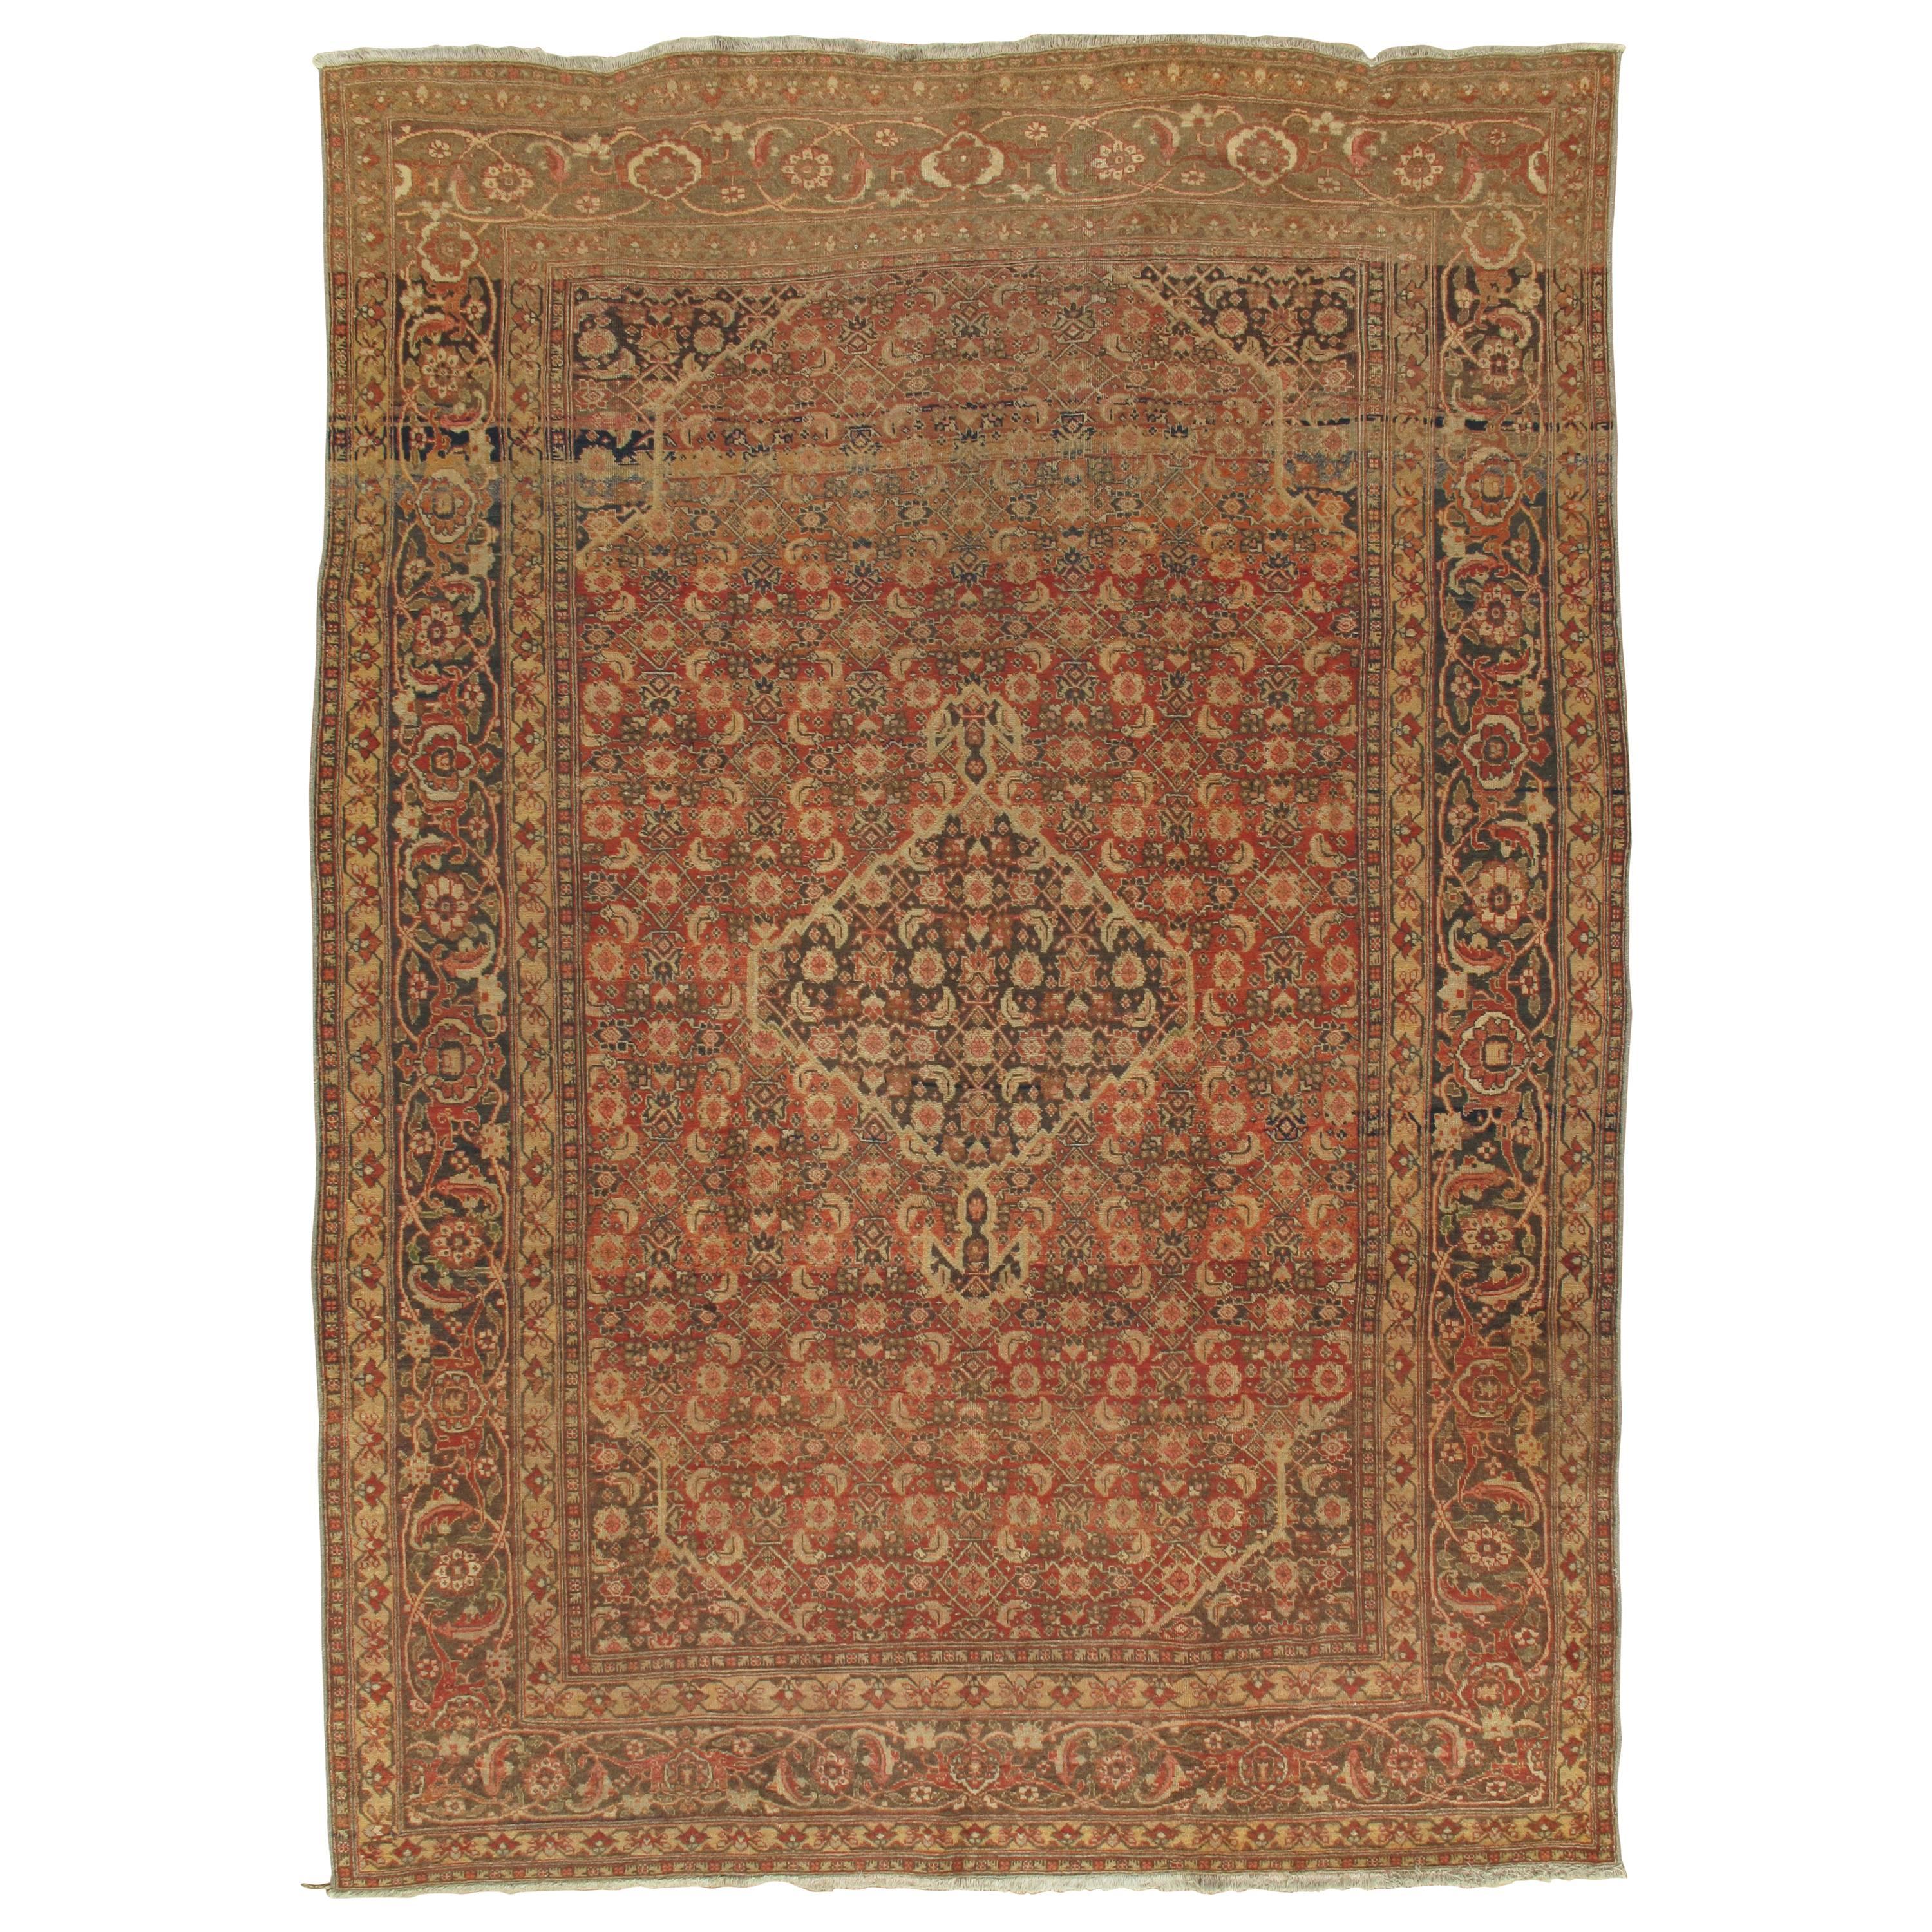 Antique Tabriz Carpet, Persian Rug, Handmade Oriental, Terracotta, Brown, Beige For Sale